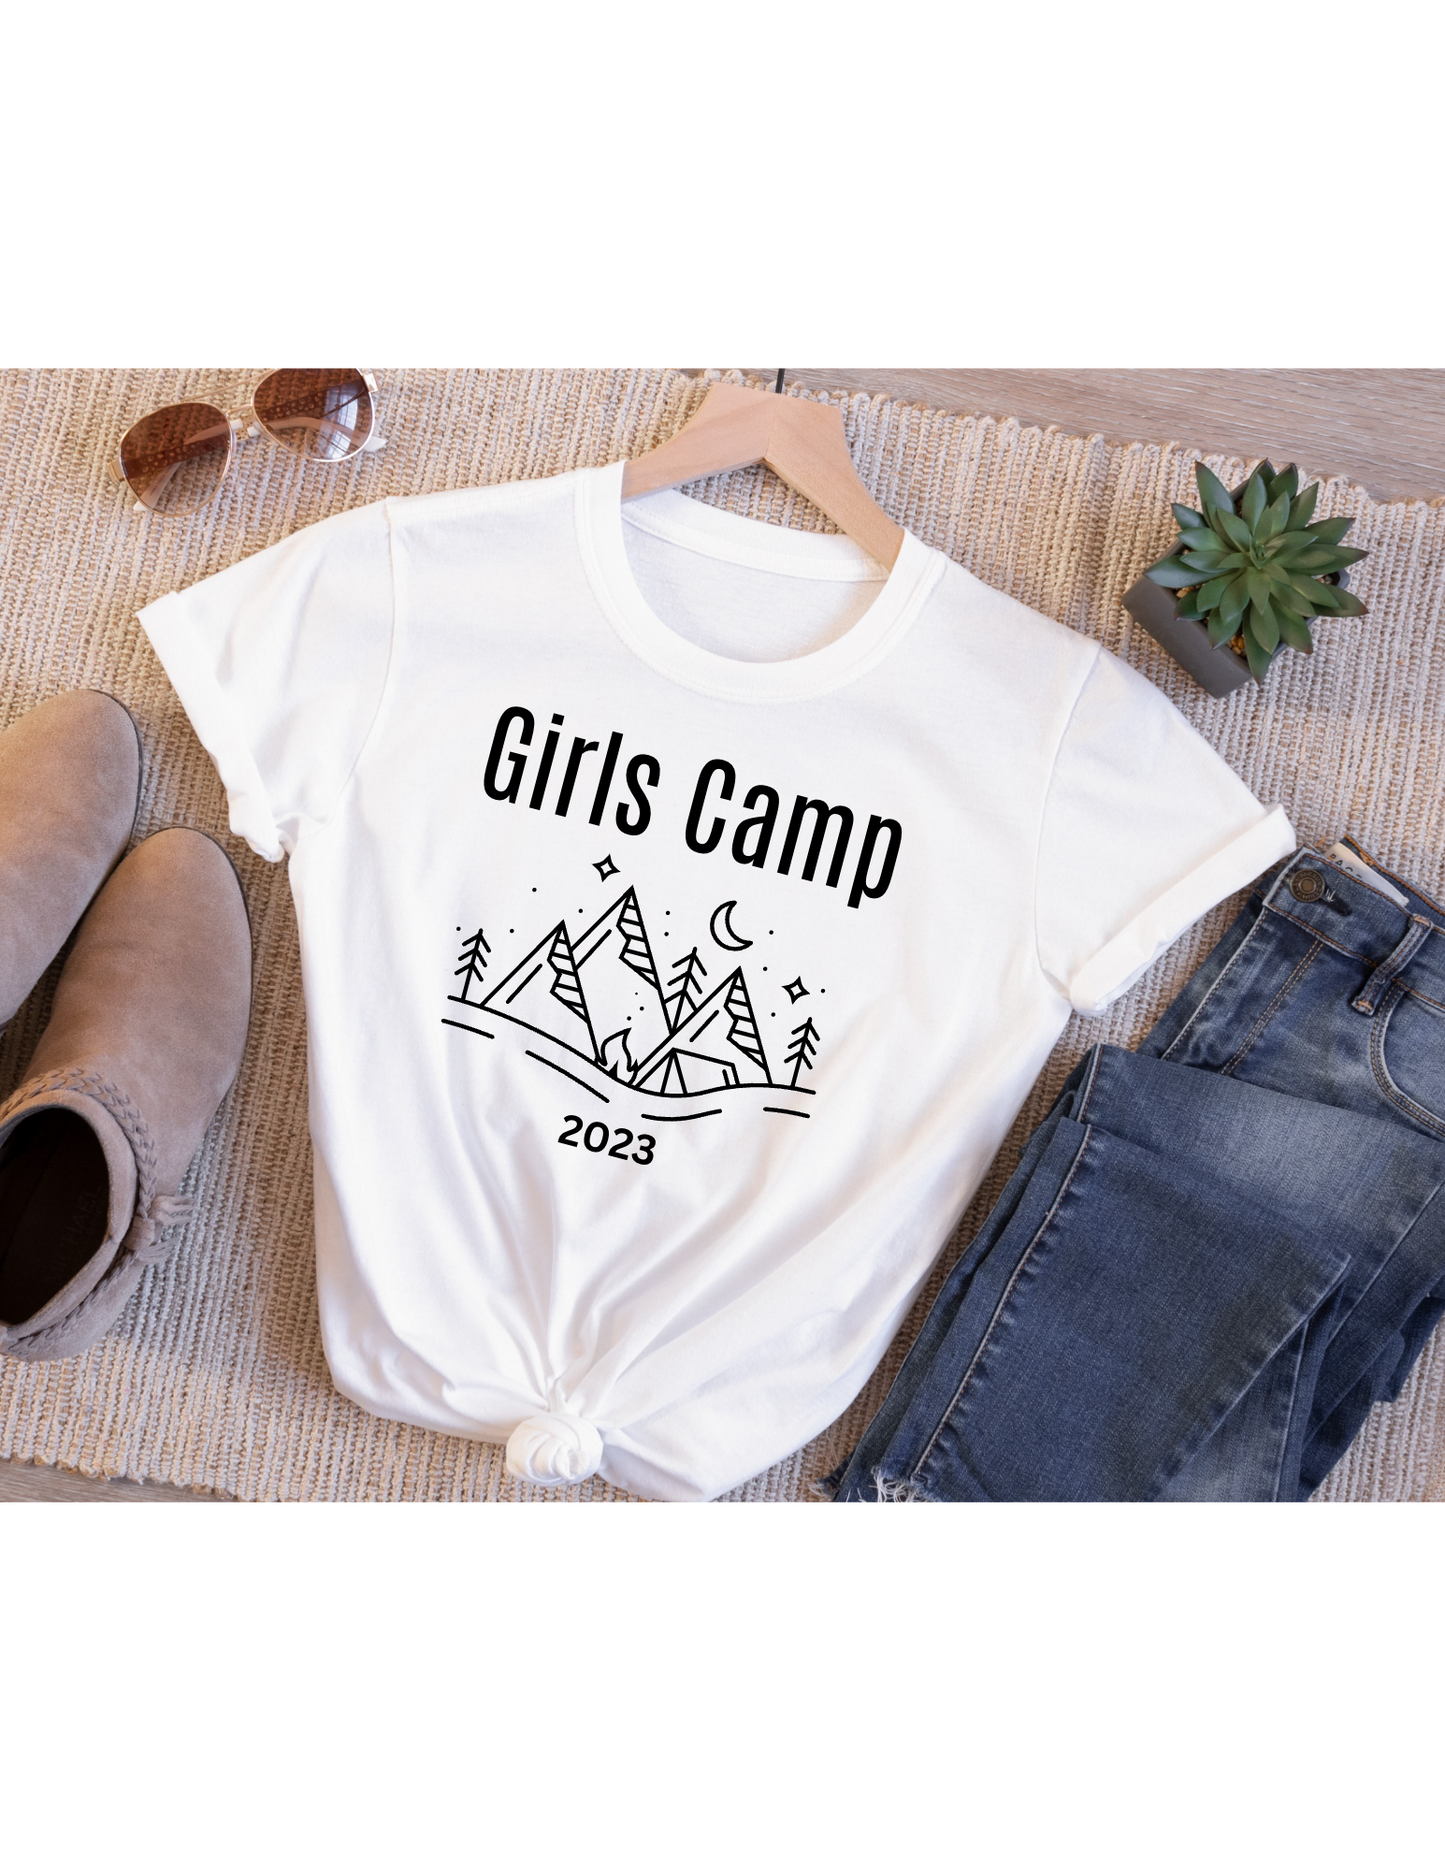 Girl's Camp 2023 Mountains T-Shirt